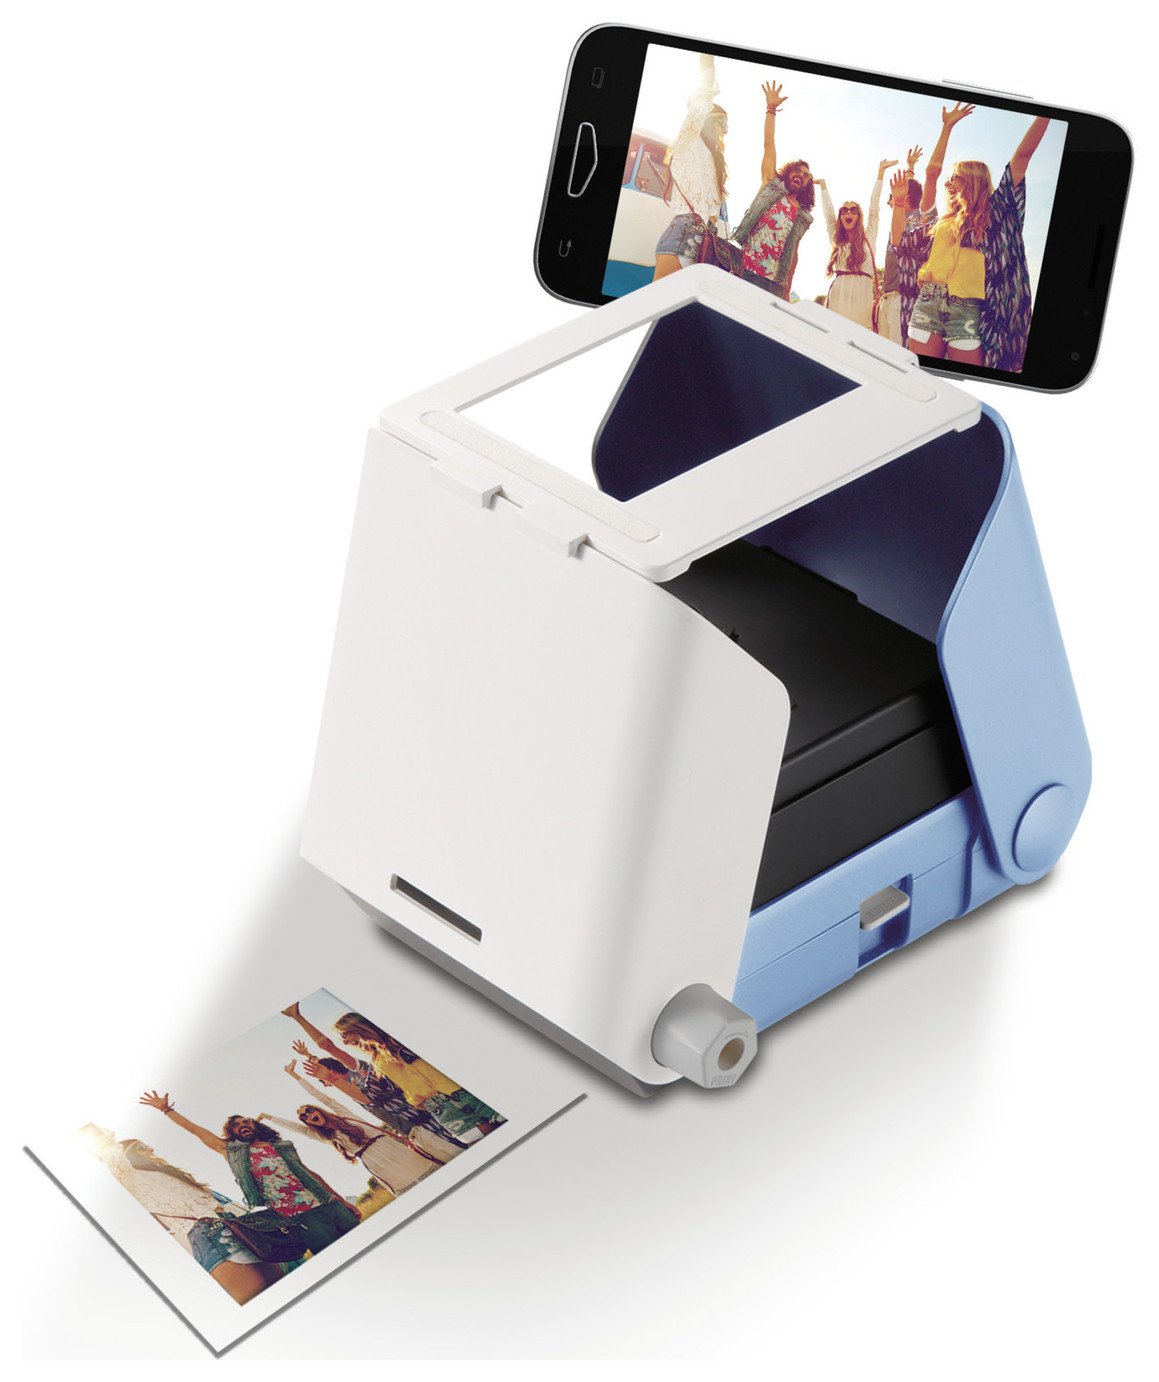 Tomy KiiPix Portable Smartphone Printer review